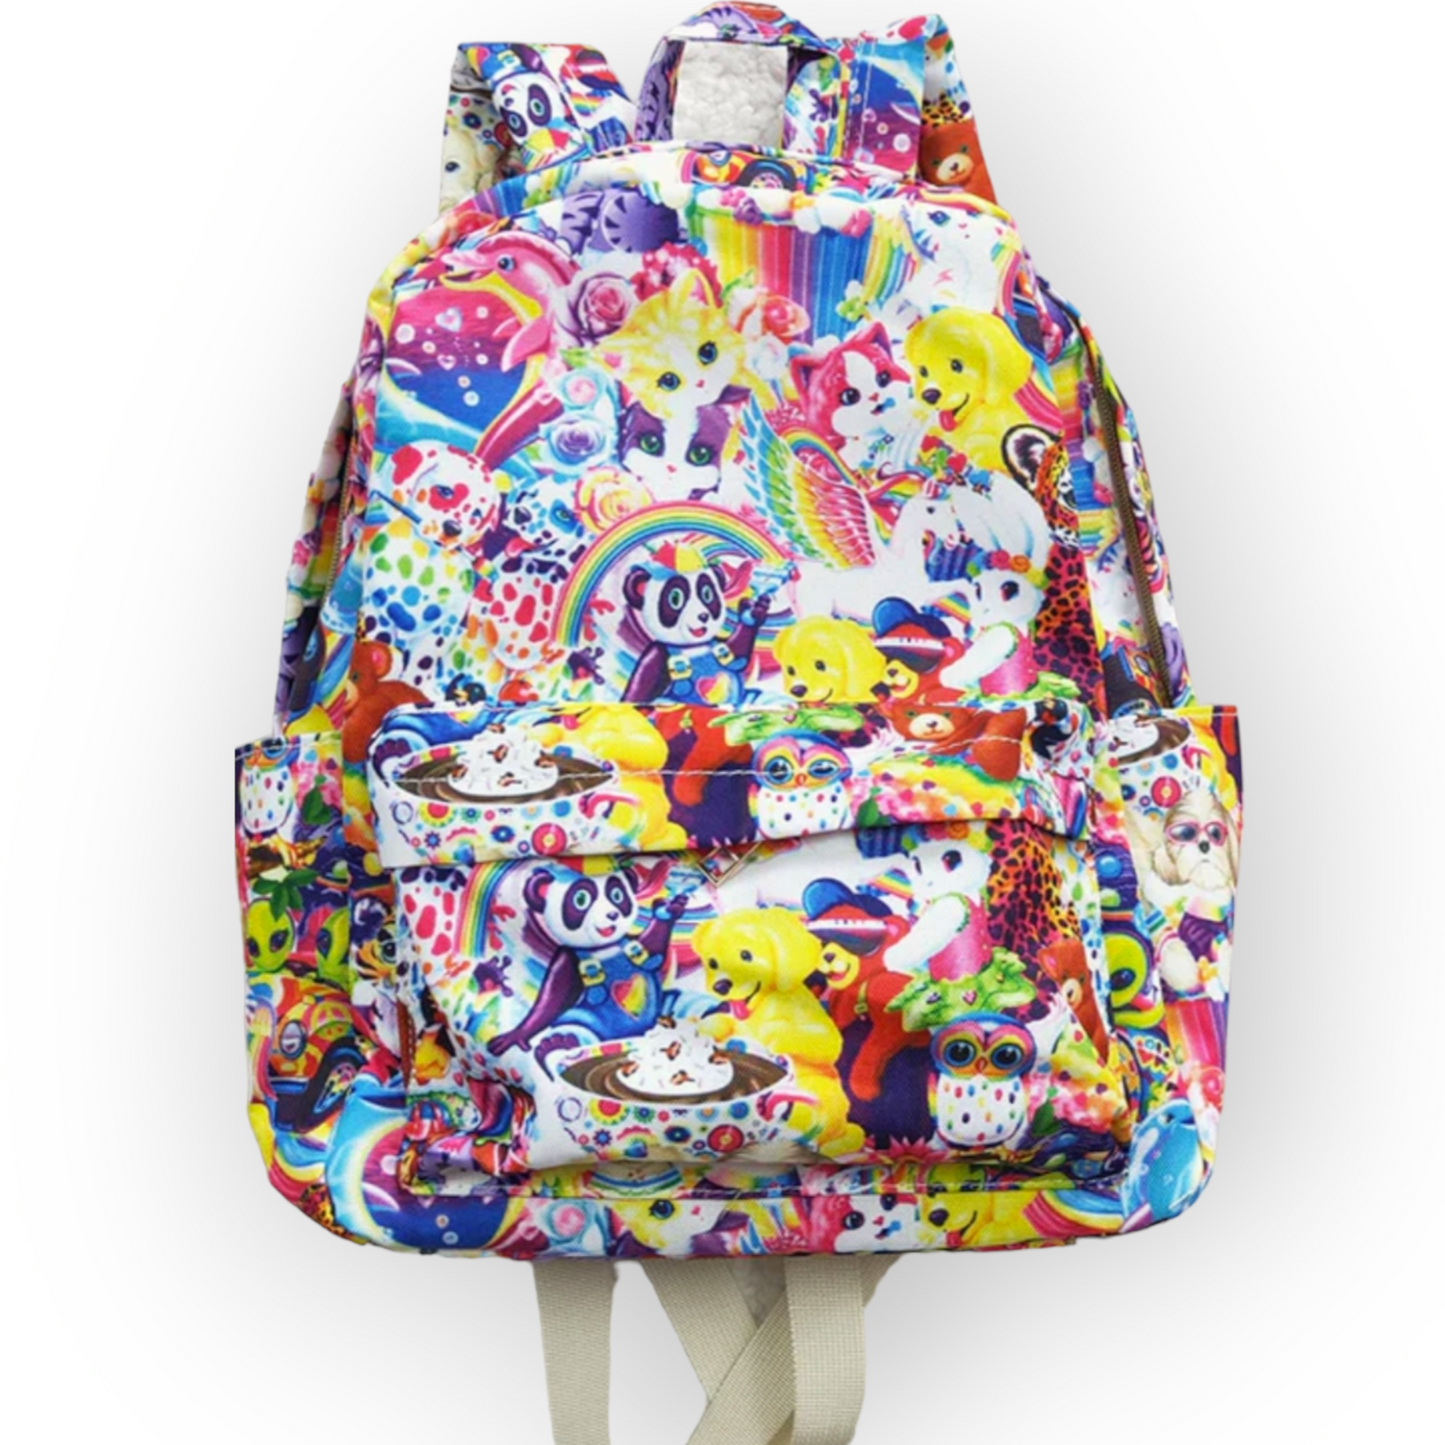 Color backpack